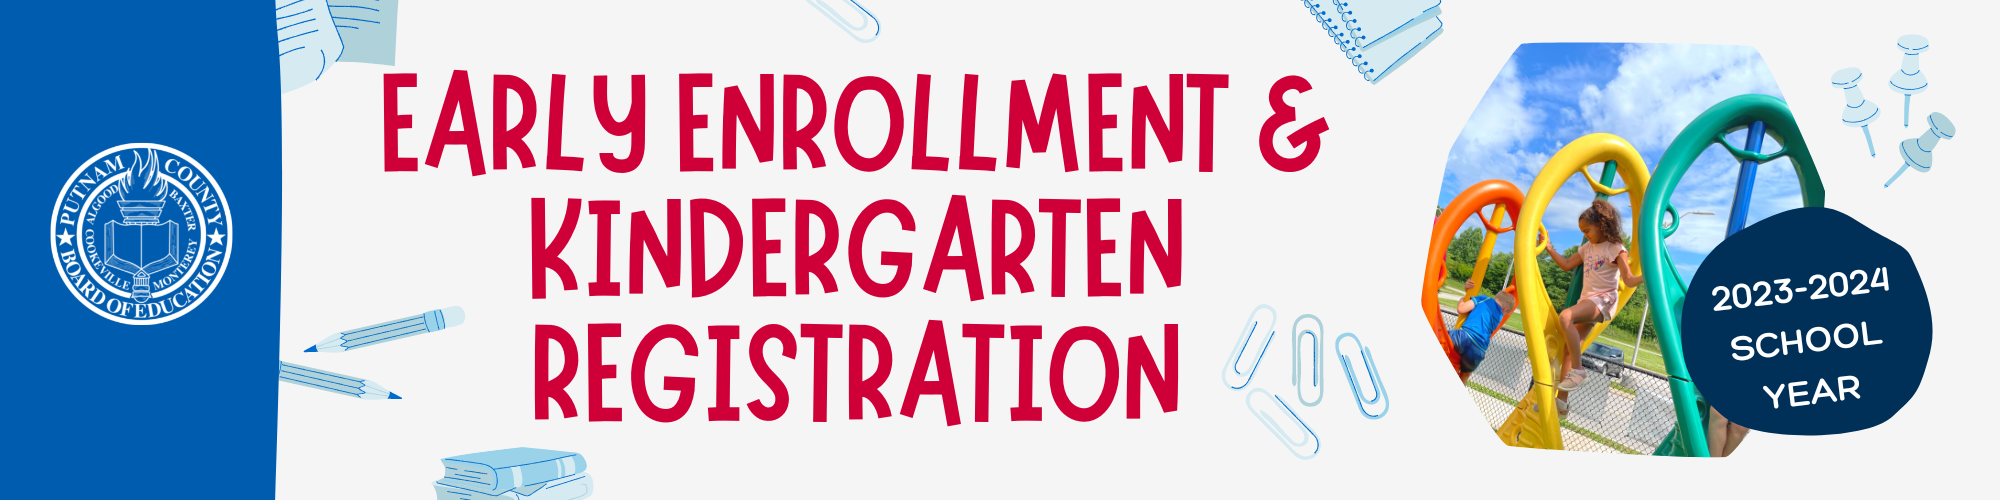 Early Enrollment & Kindergarten Registration